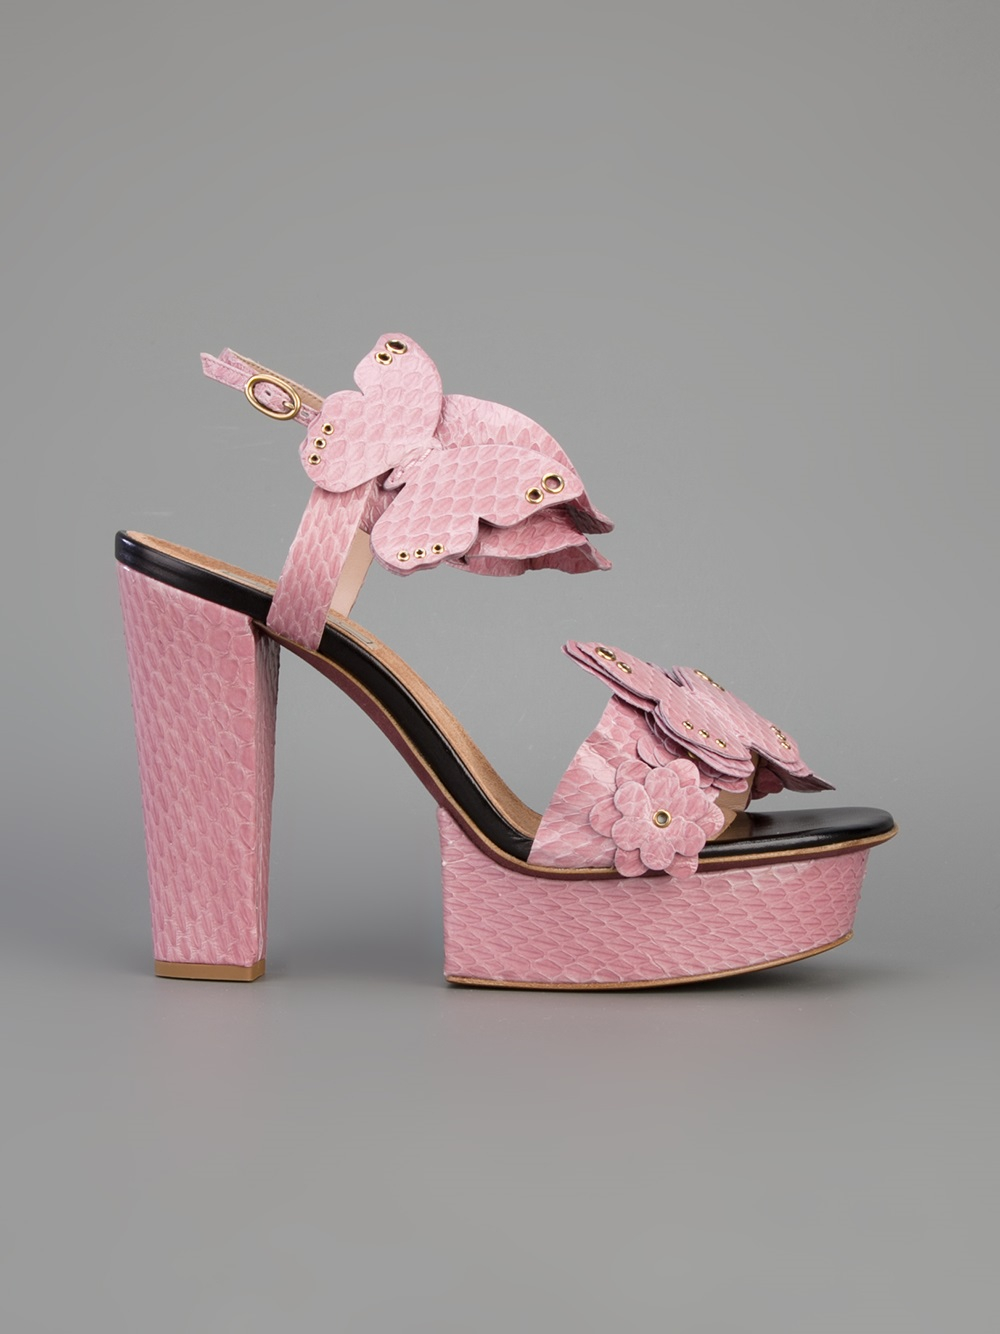 Nina ricci Butterfly Platform Heeled Sandal in Pink | Lyst